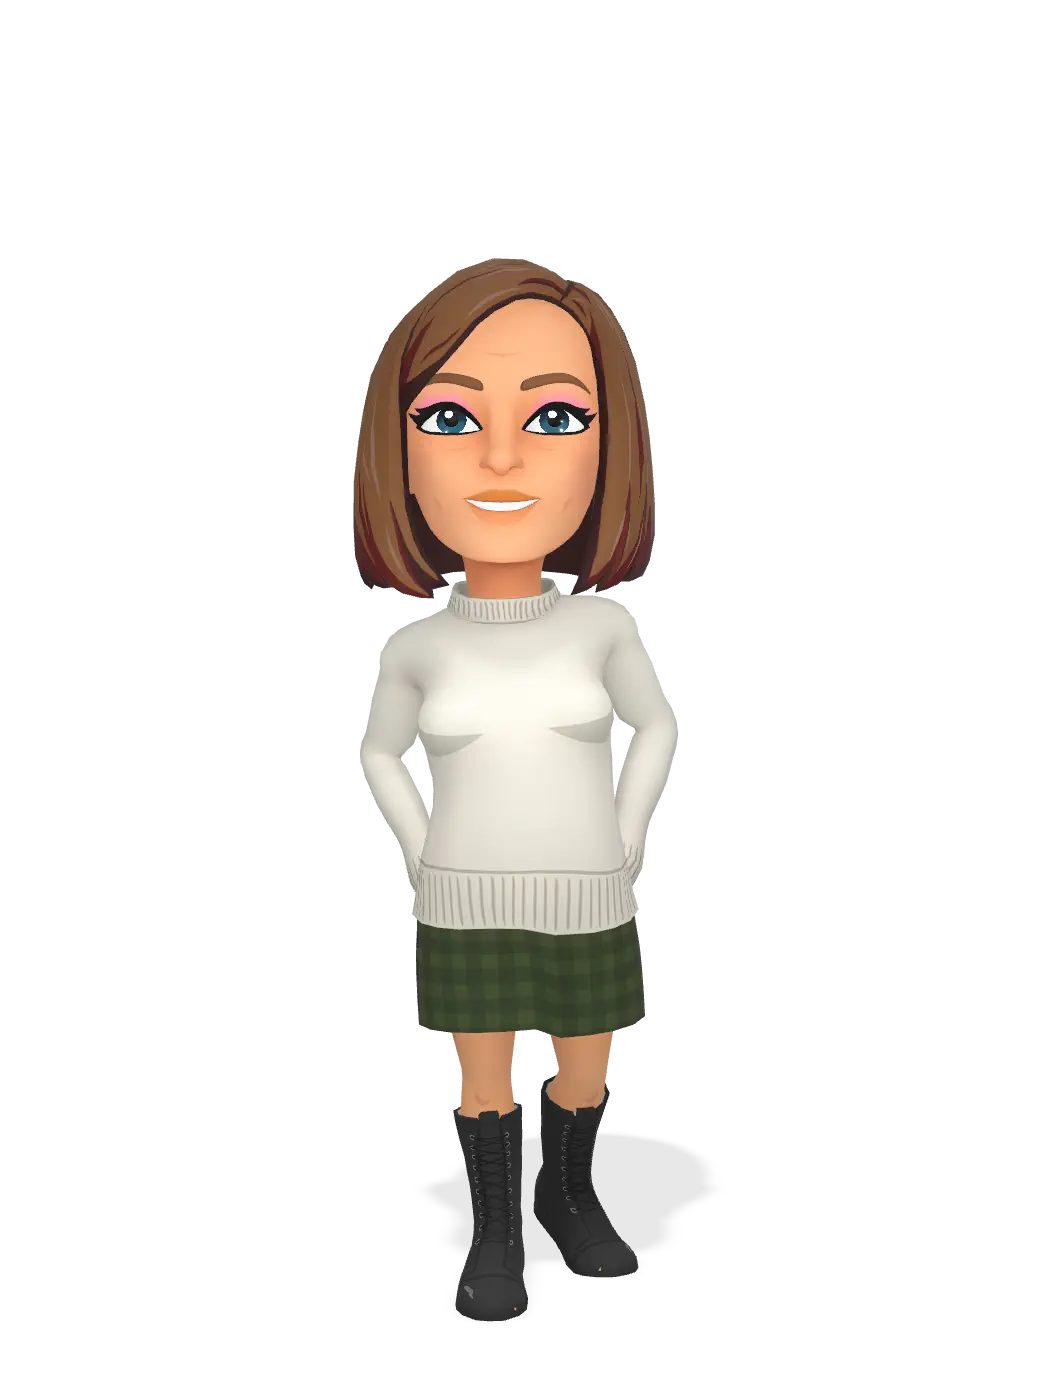 3D Bitmoji for marketingrx avatar